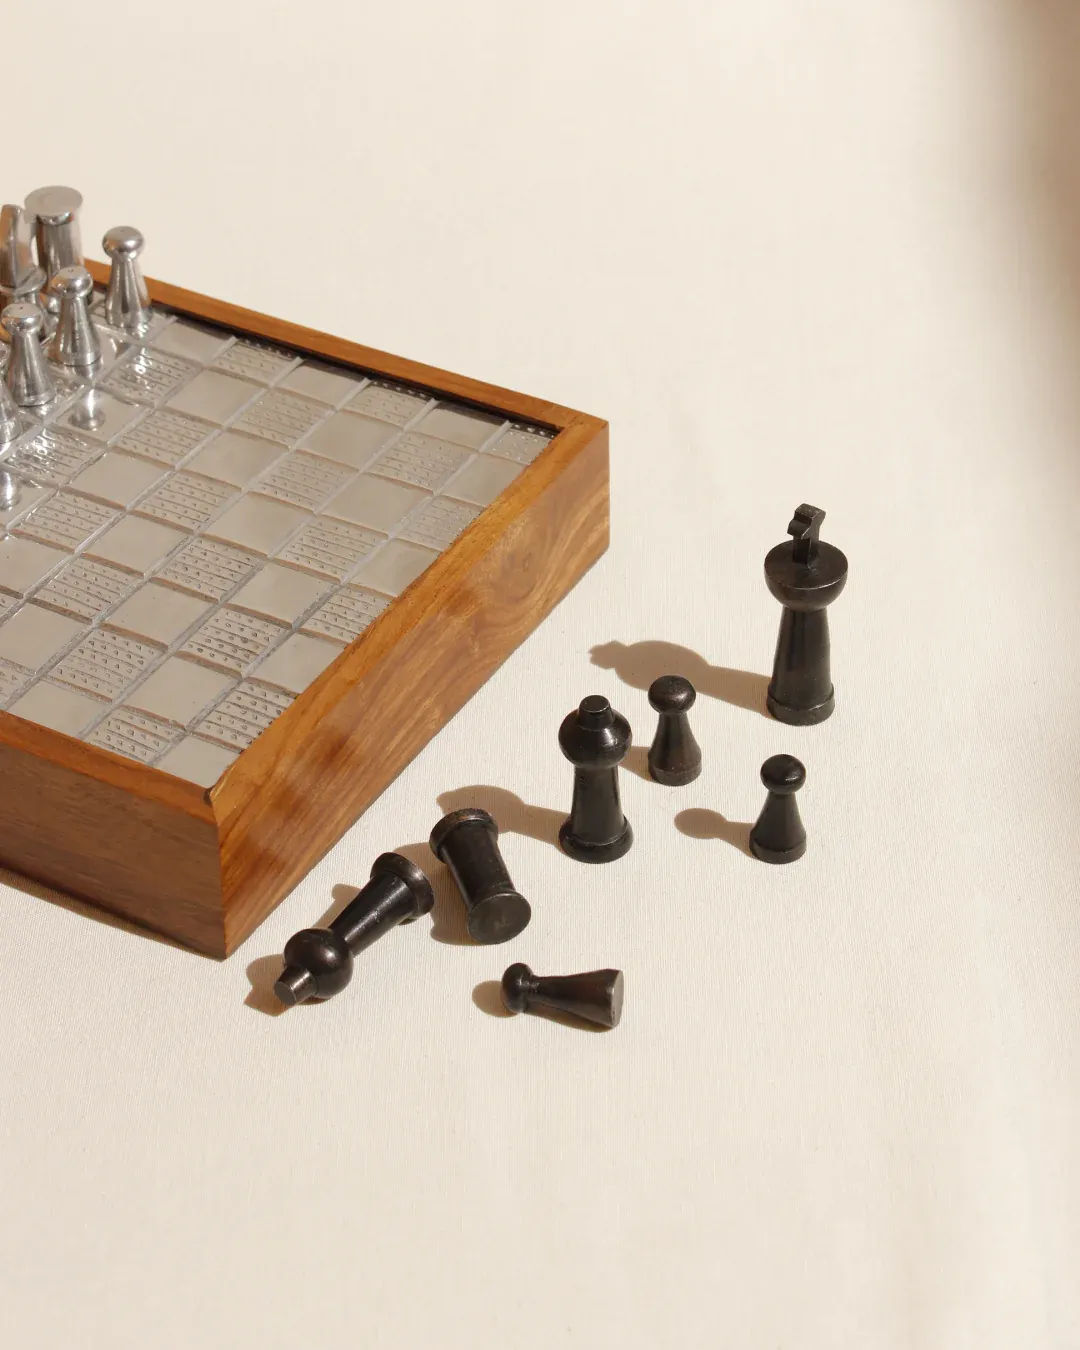 Chess Wood and Metal Chessboard Boga Avante Shop